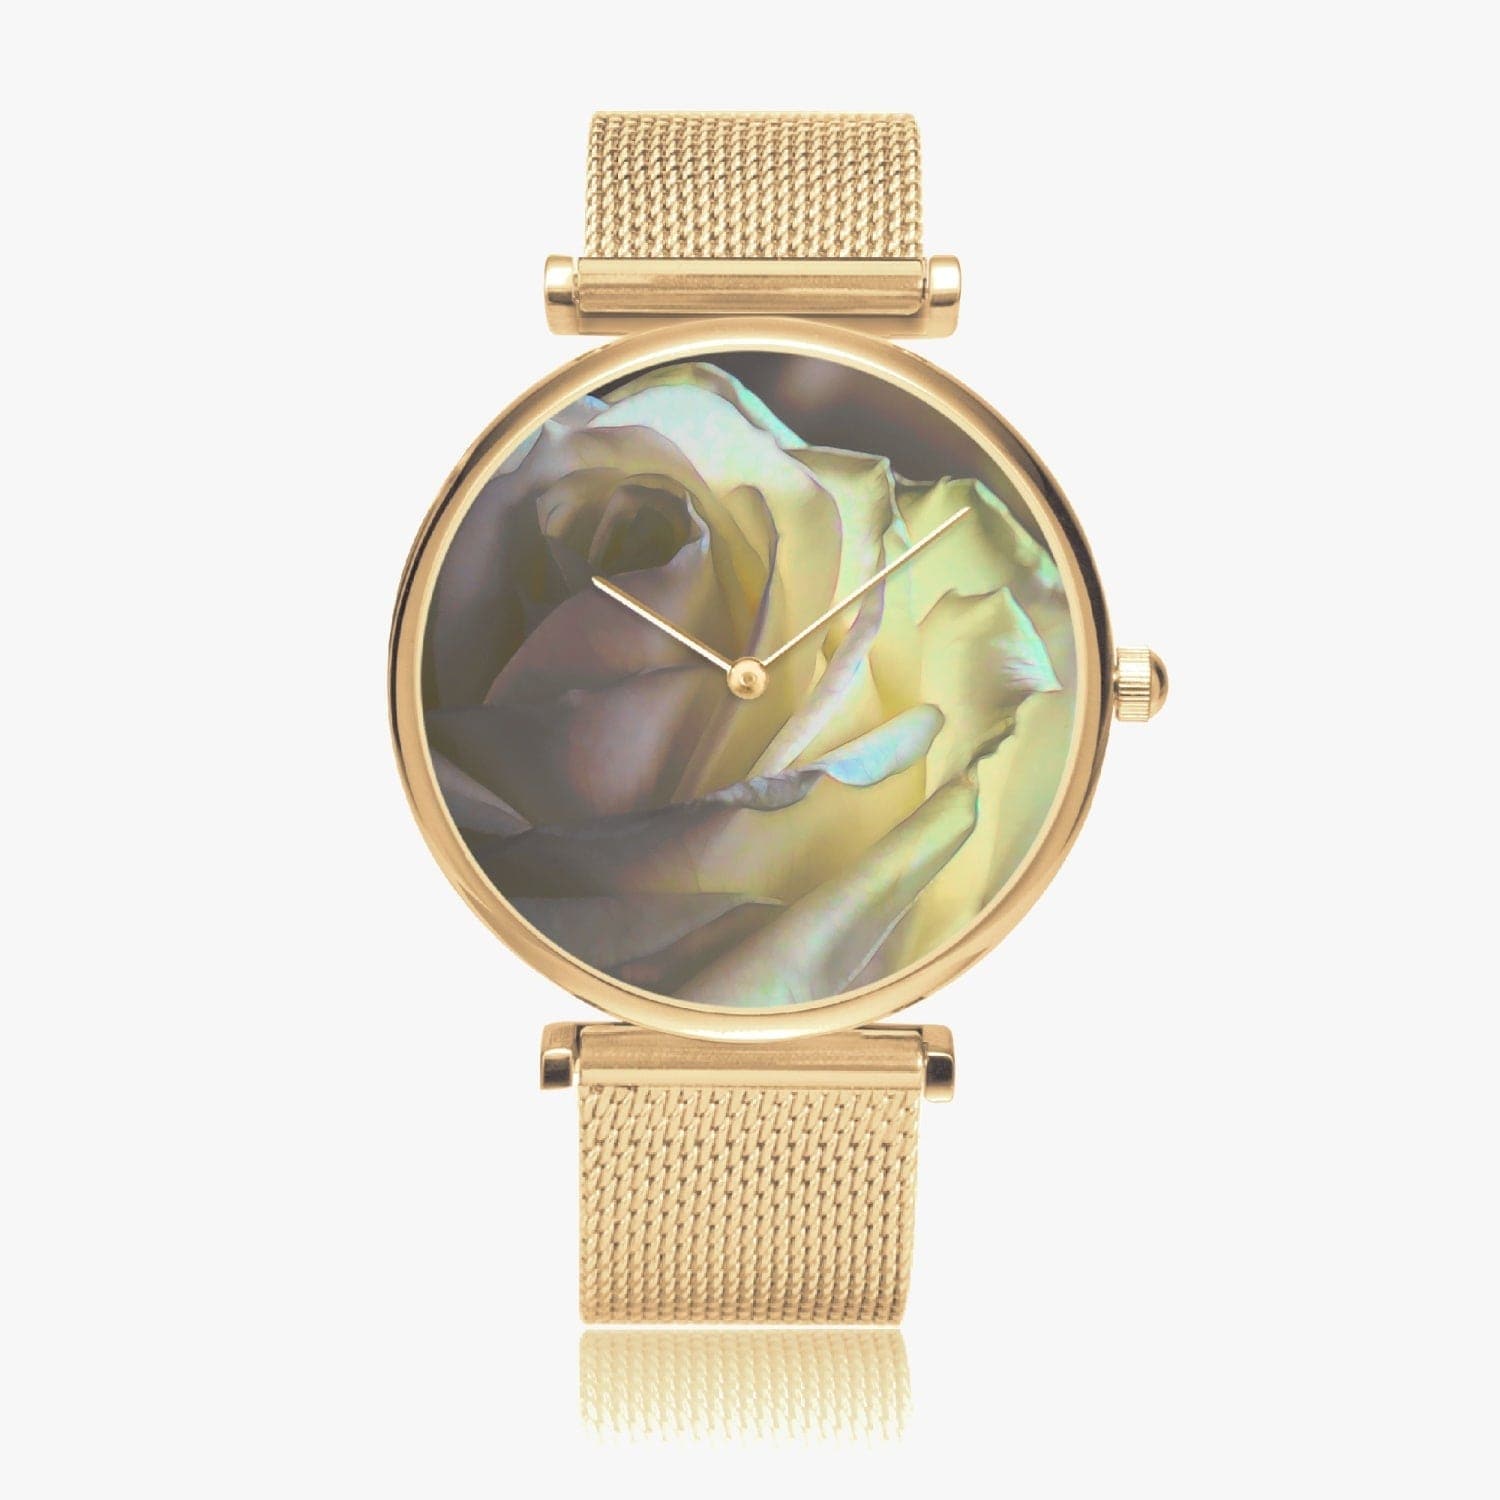 Shy white rose. New Stylish Ultra-Thin Quartz Watch, by Sensus Studio Design